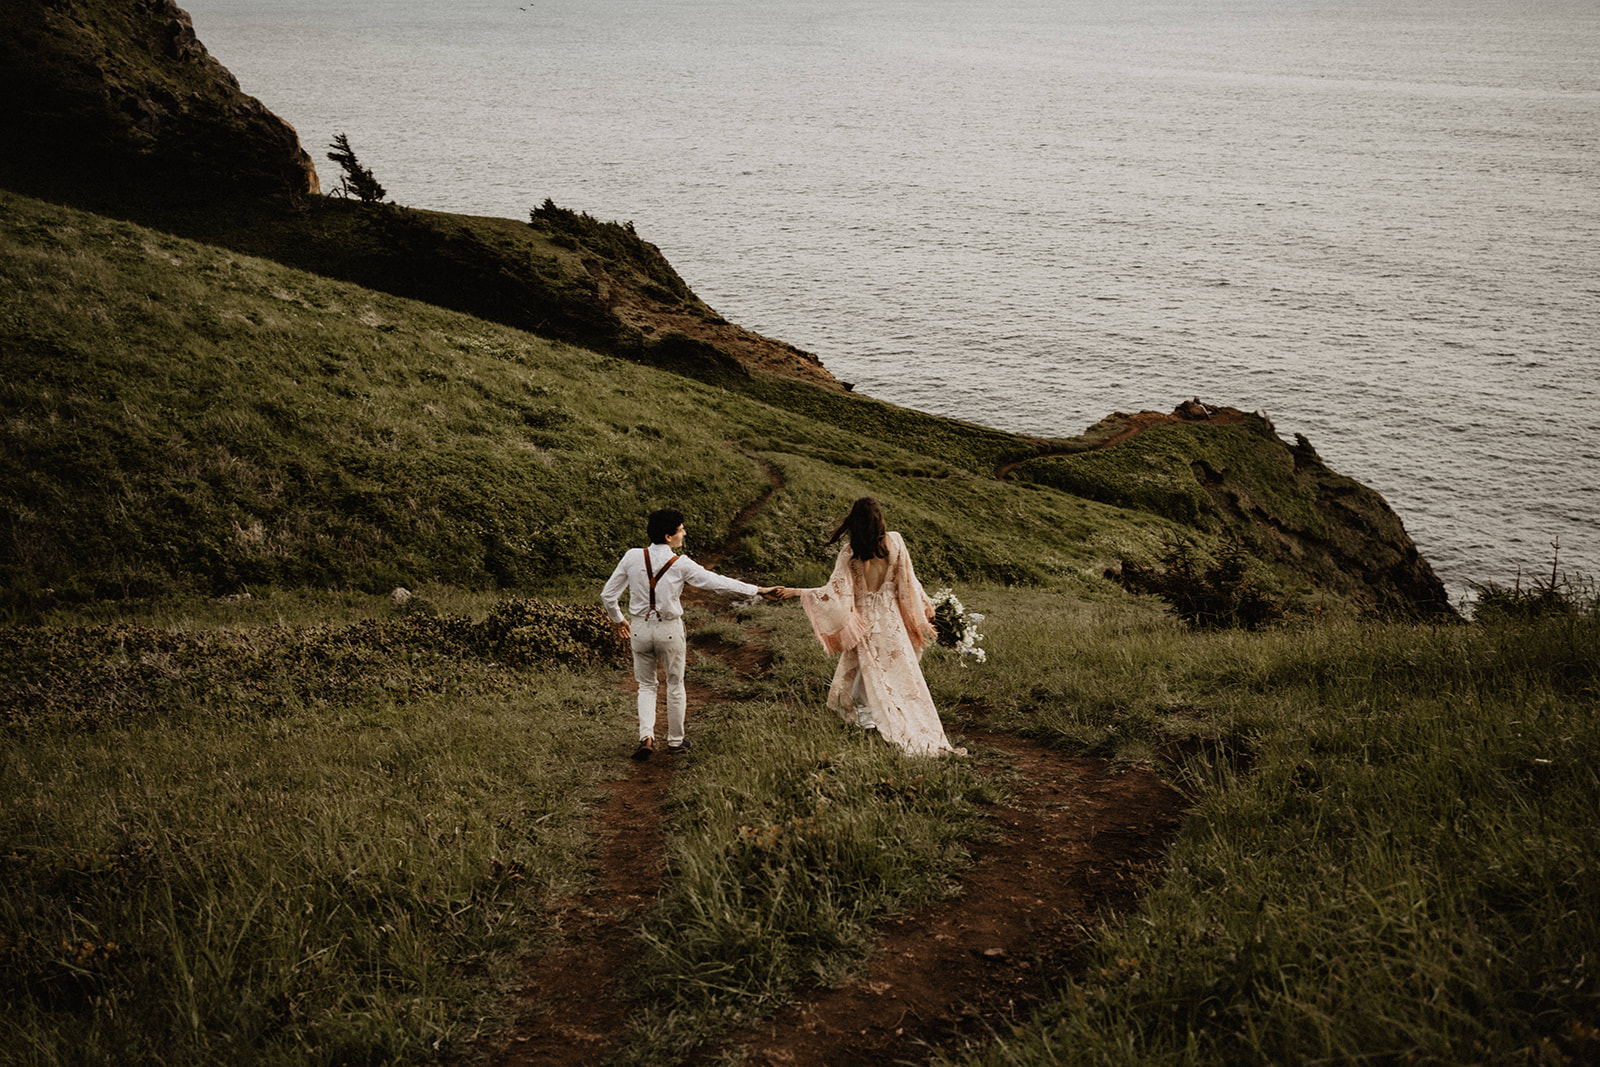 Bride and groom run through a grassy, beachside meadow during their destination elopement.